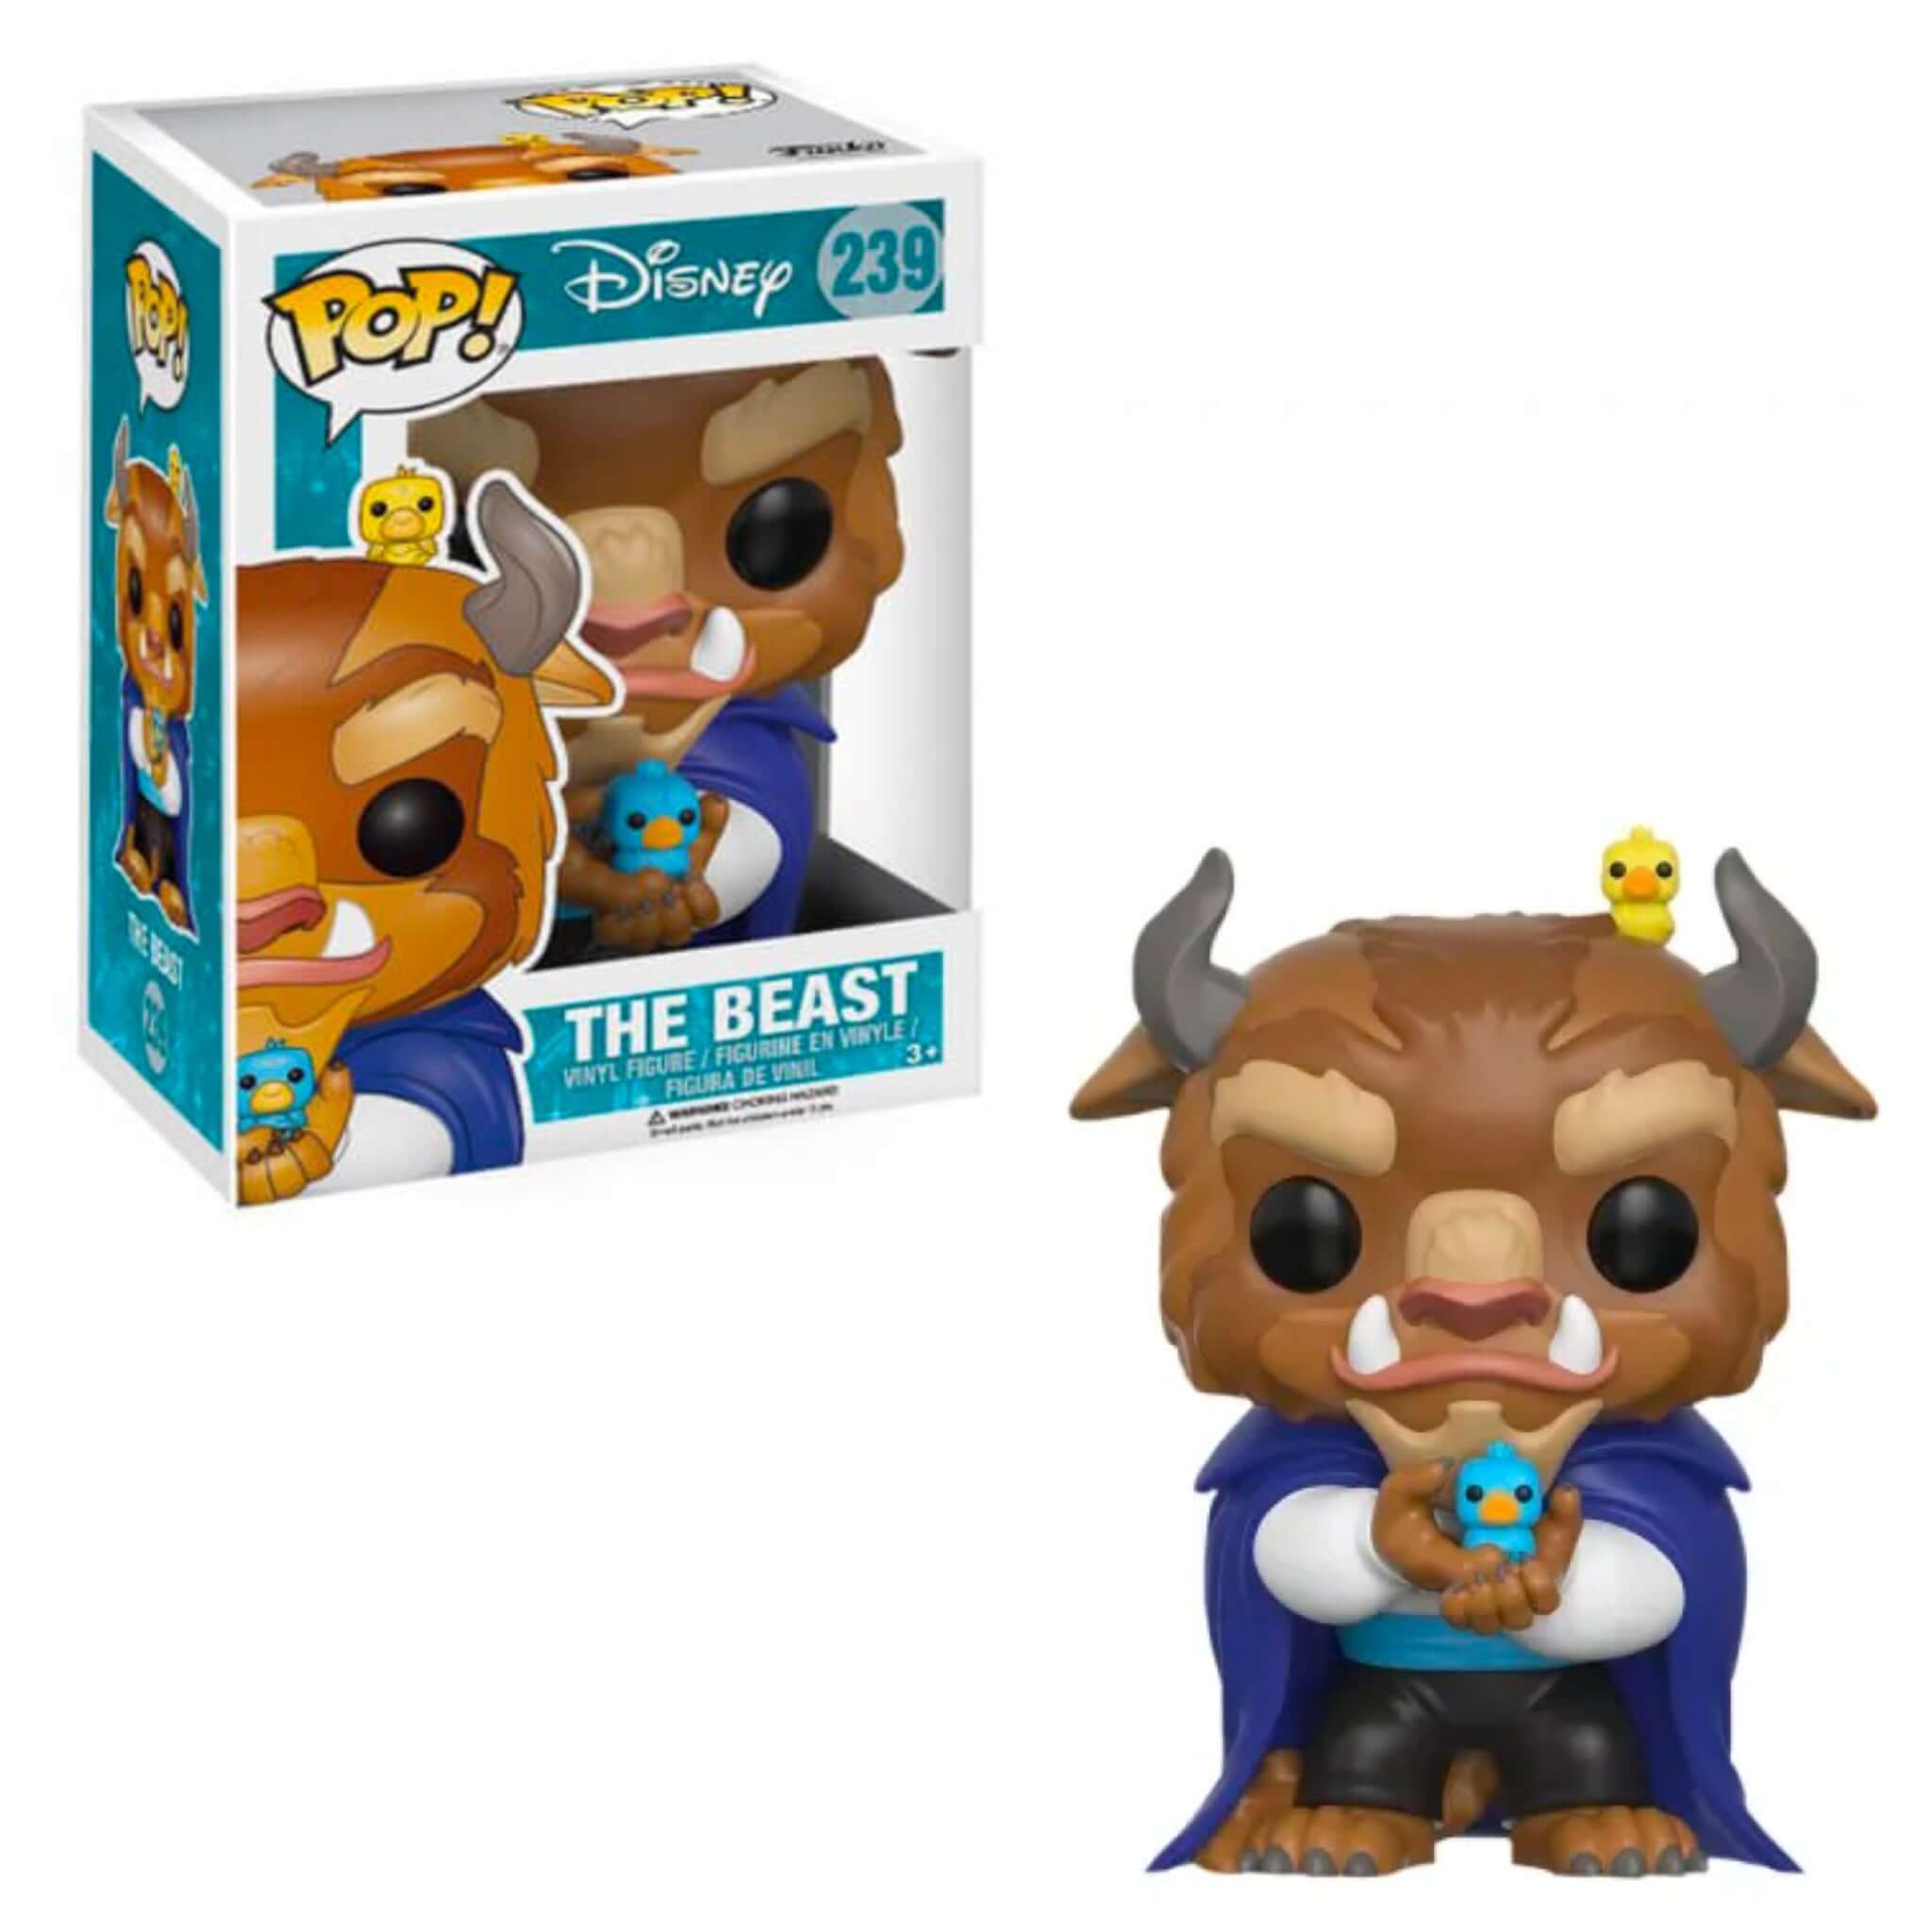 The Beast Funko Pop!-Jingle Truck Toys